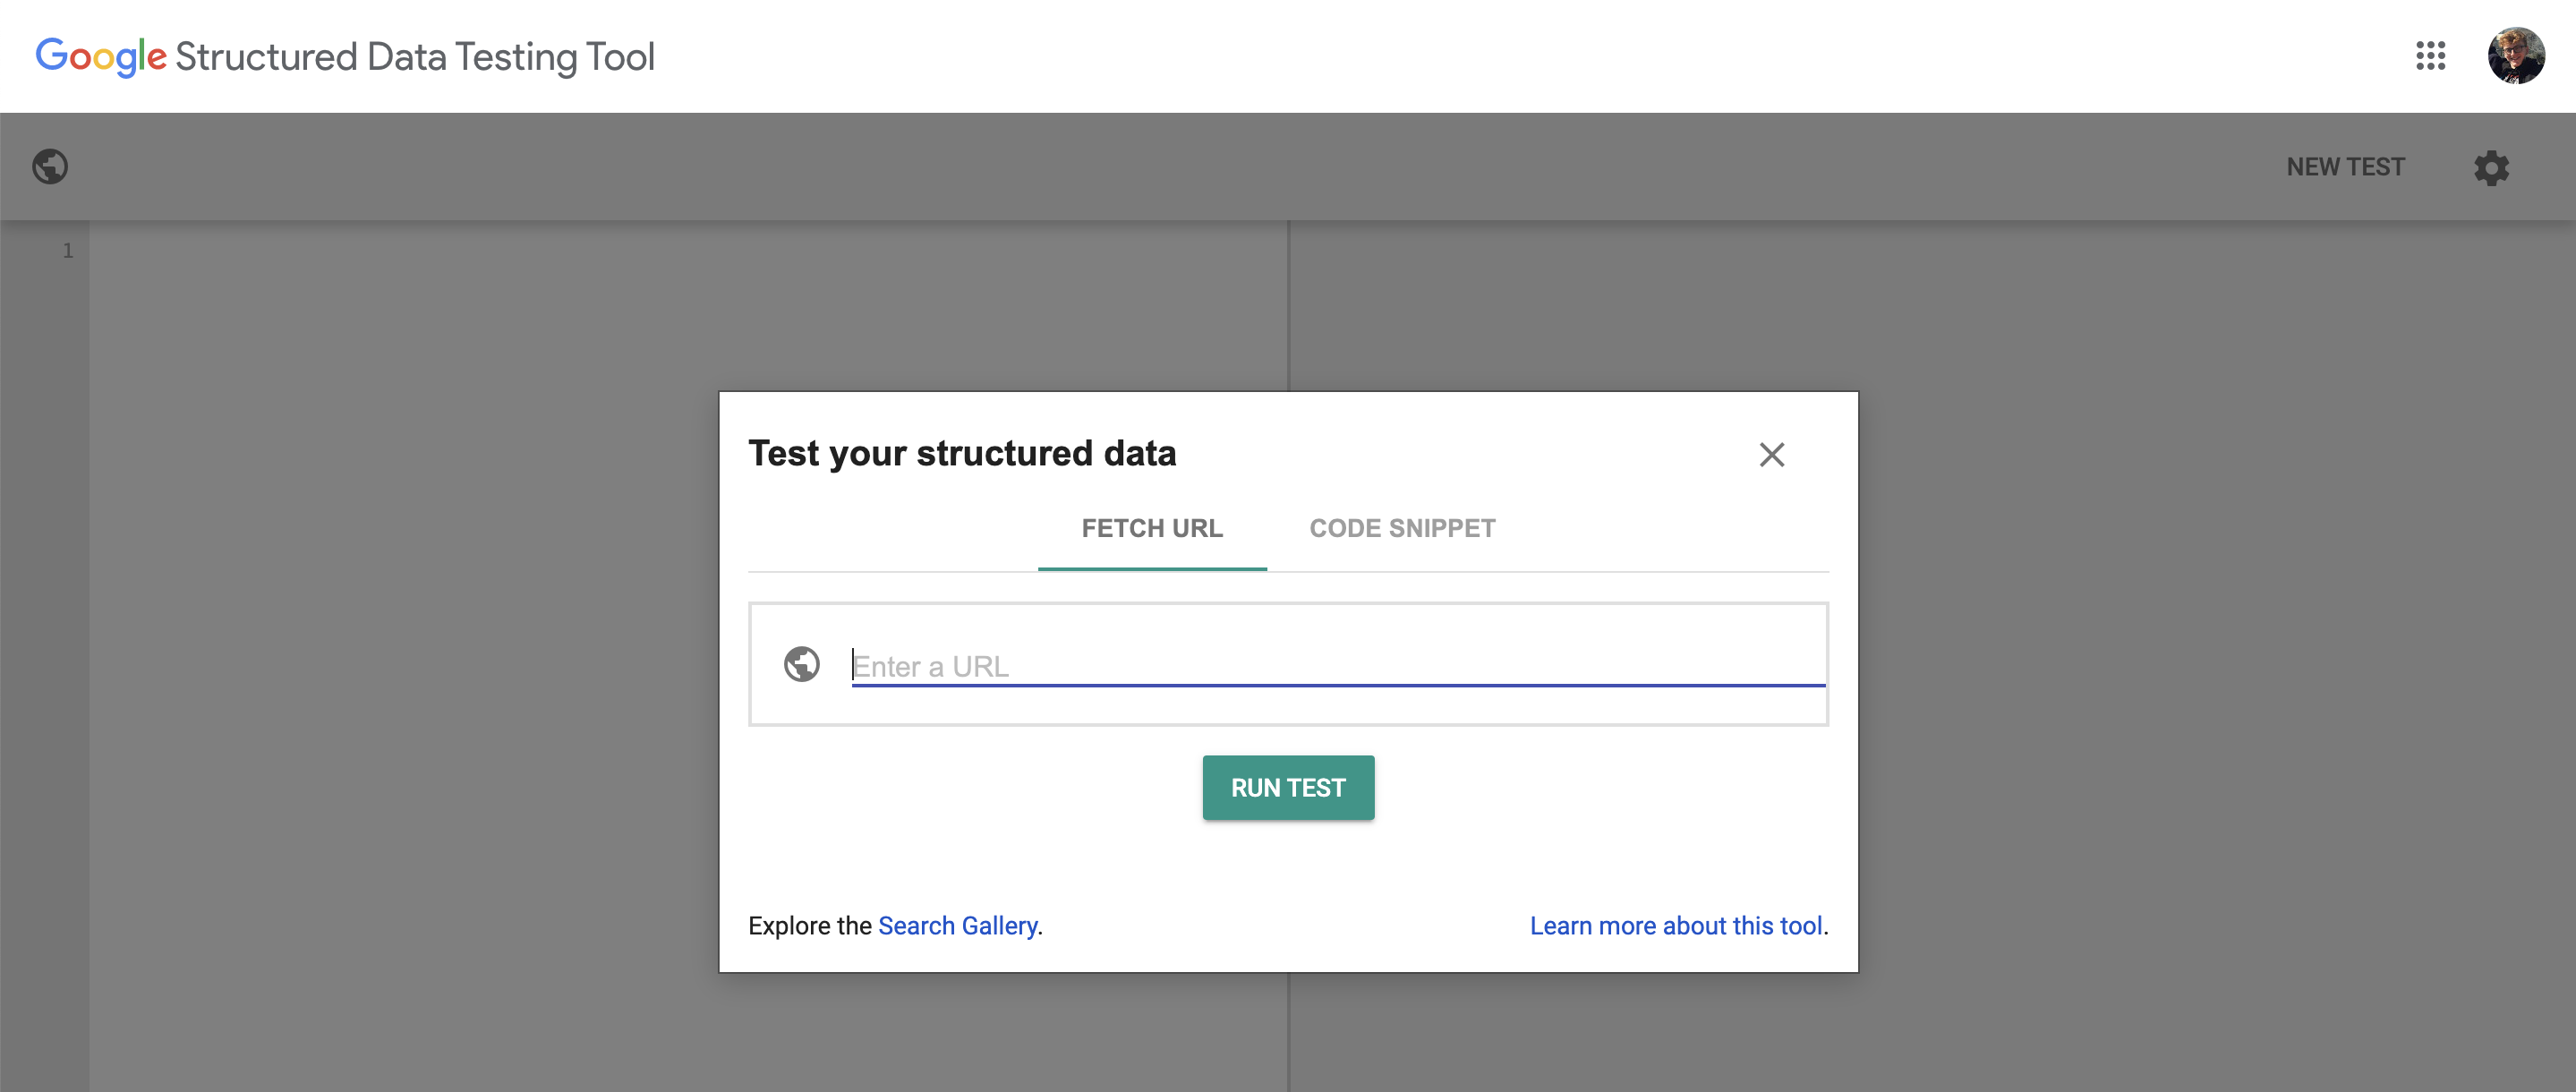 Recipe Google Structured Data Testing Tool